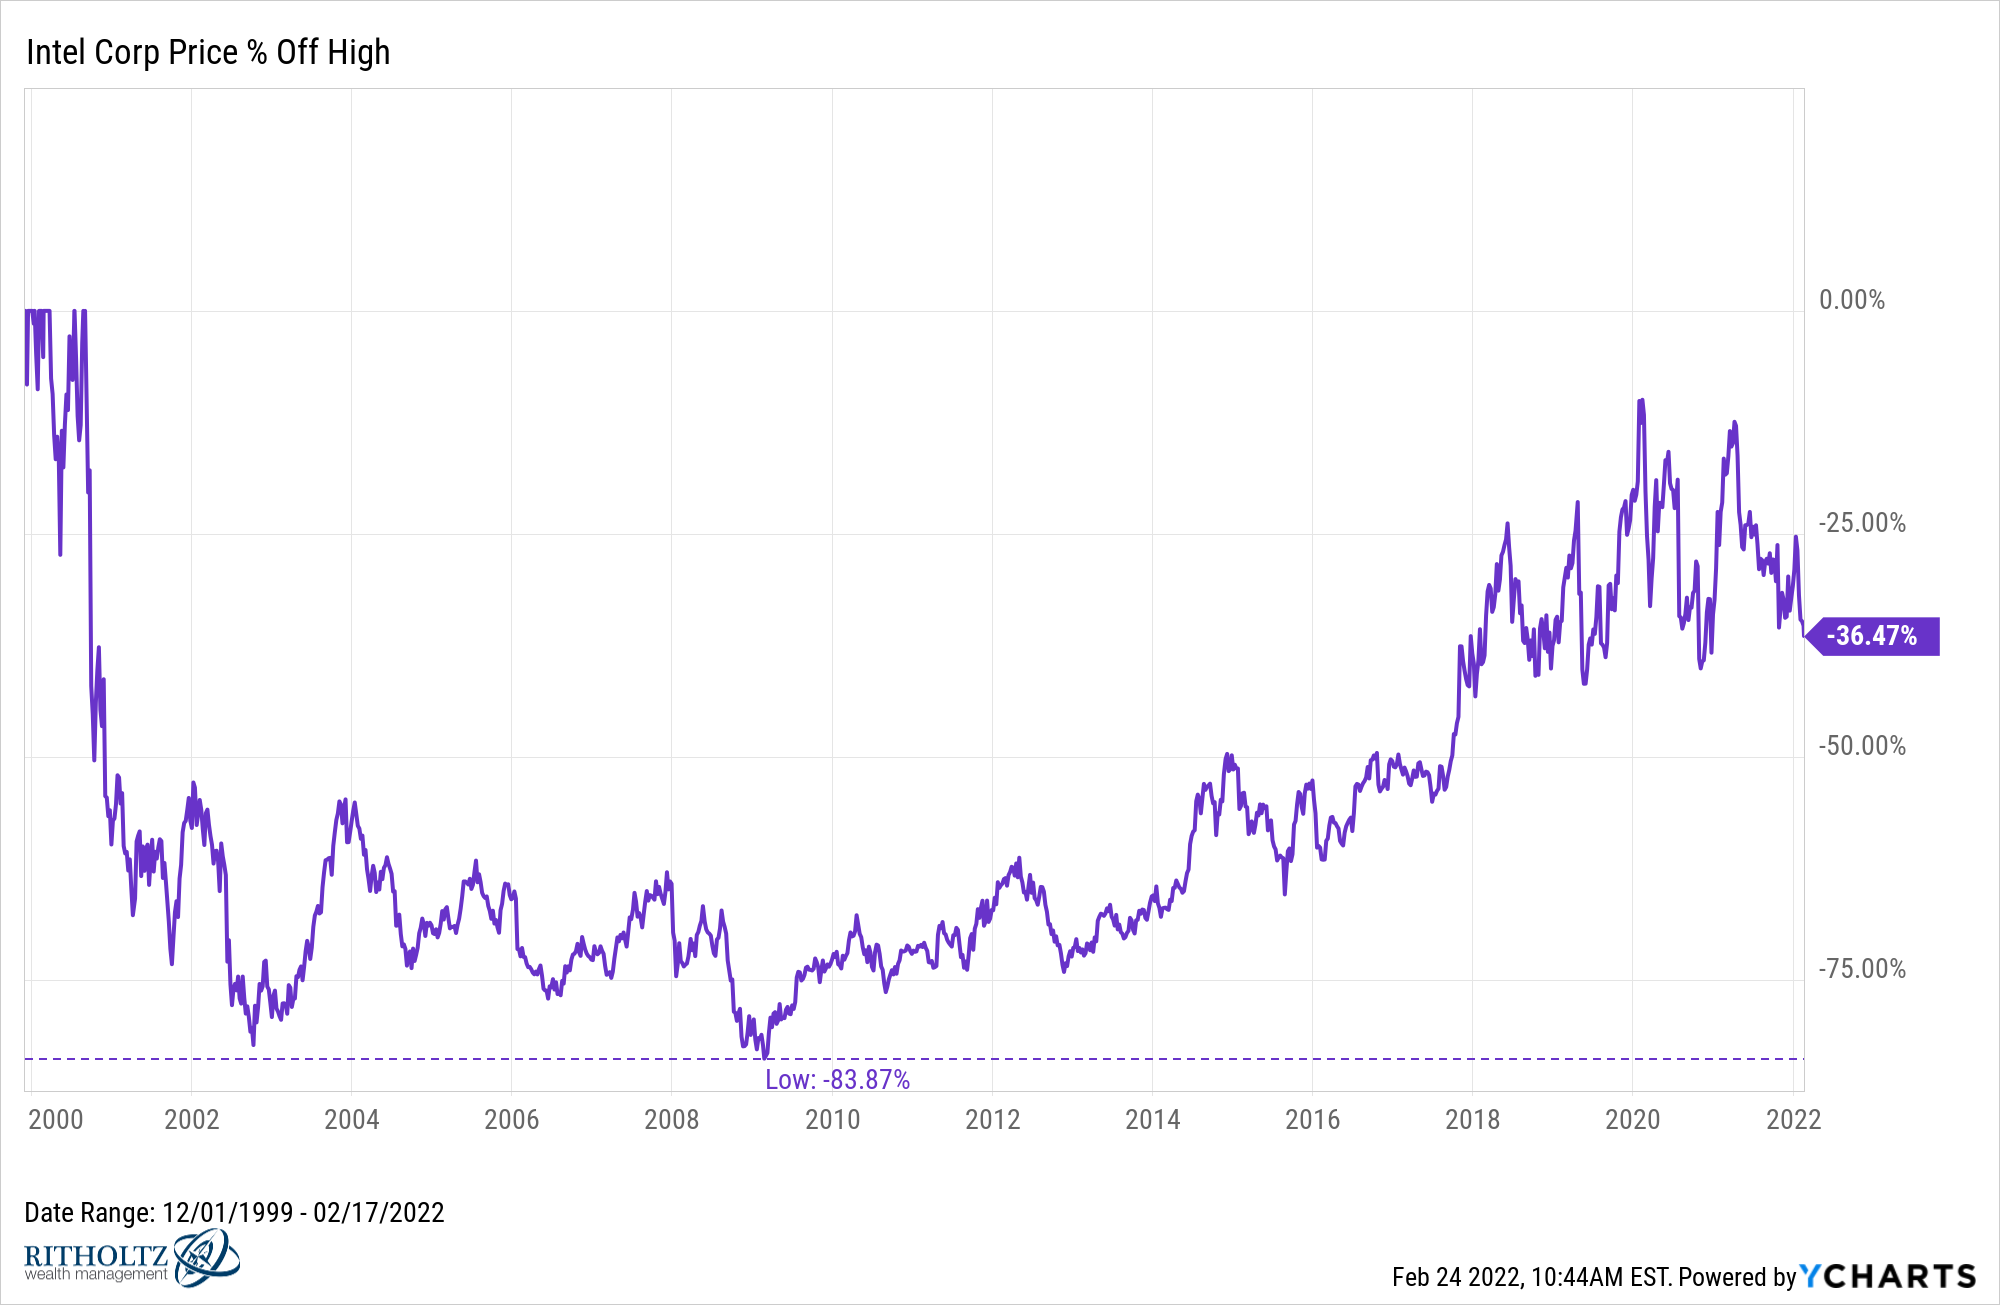 Intel Corp Price % Off High since 2000